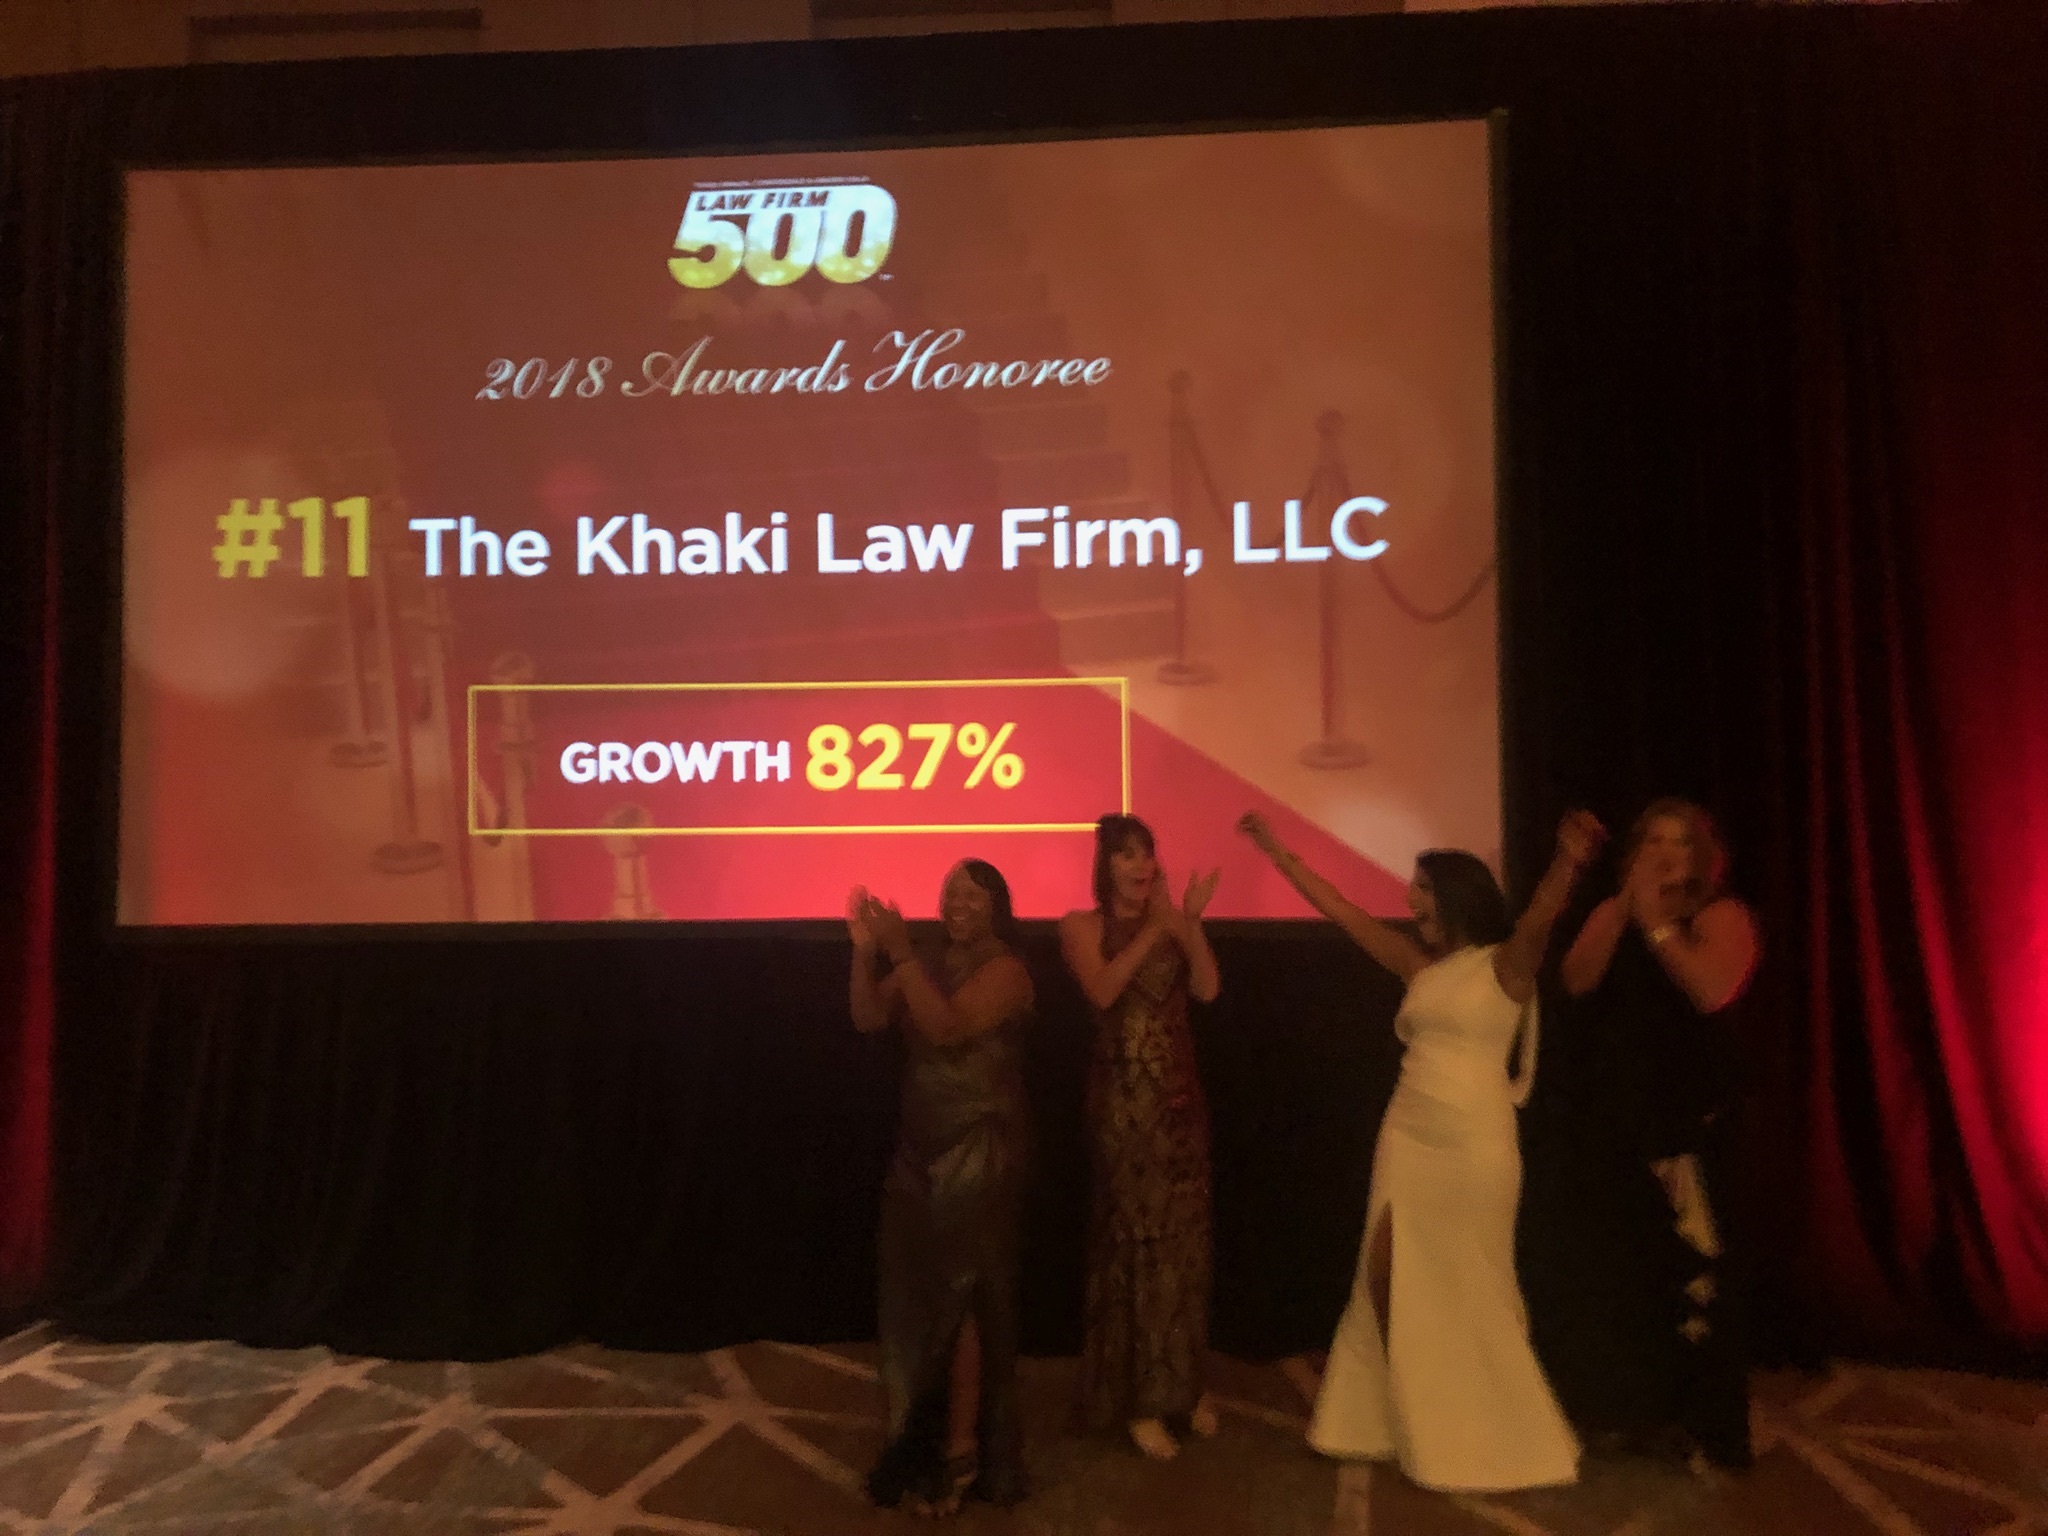 Law Firm 500 Award